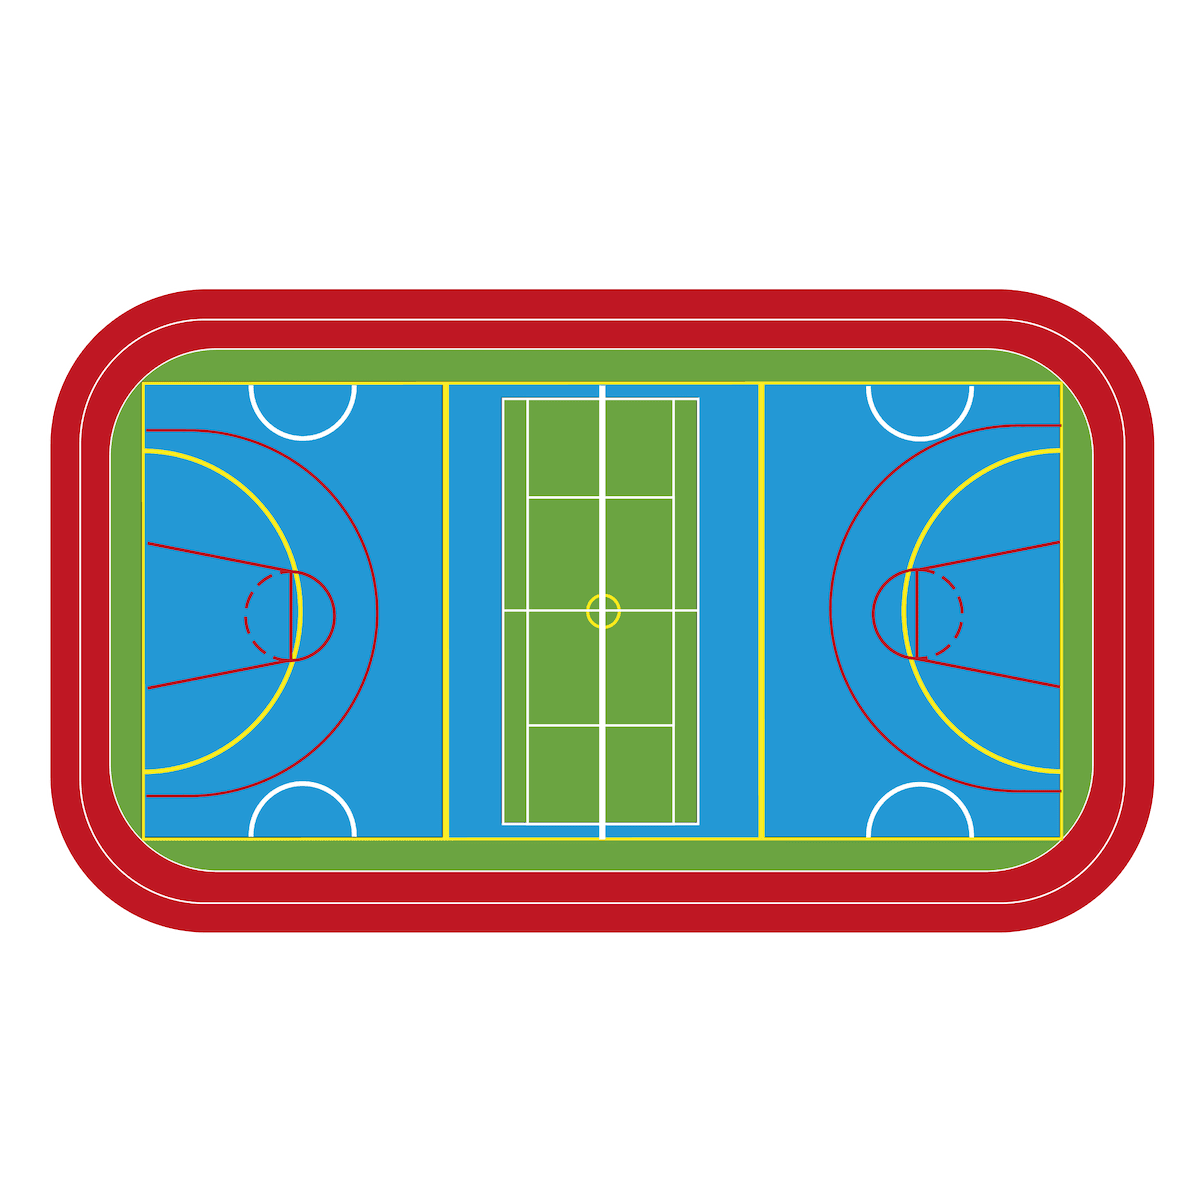 Playground-Marking-Sports-Coating-Multicourt-with-Running-Track